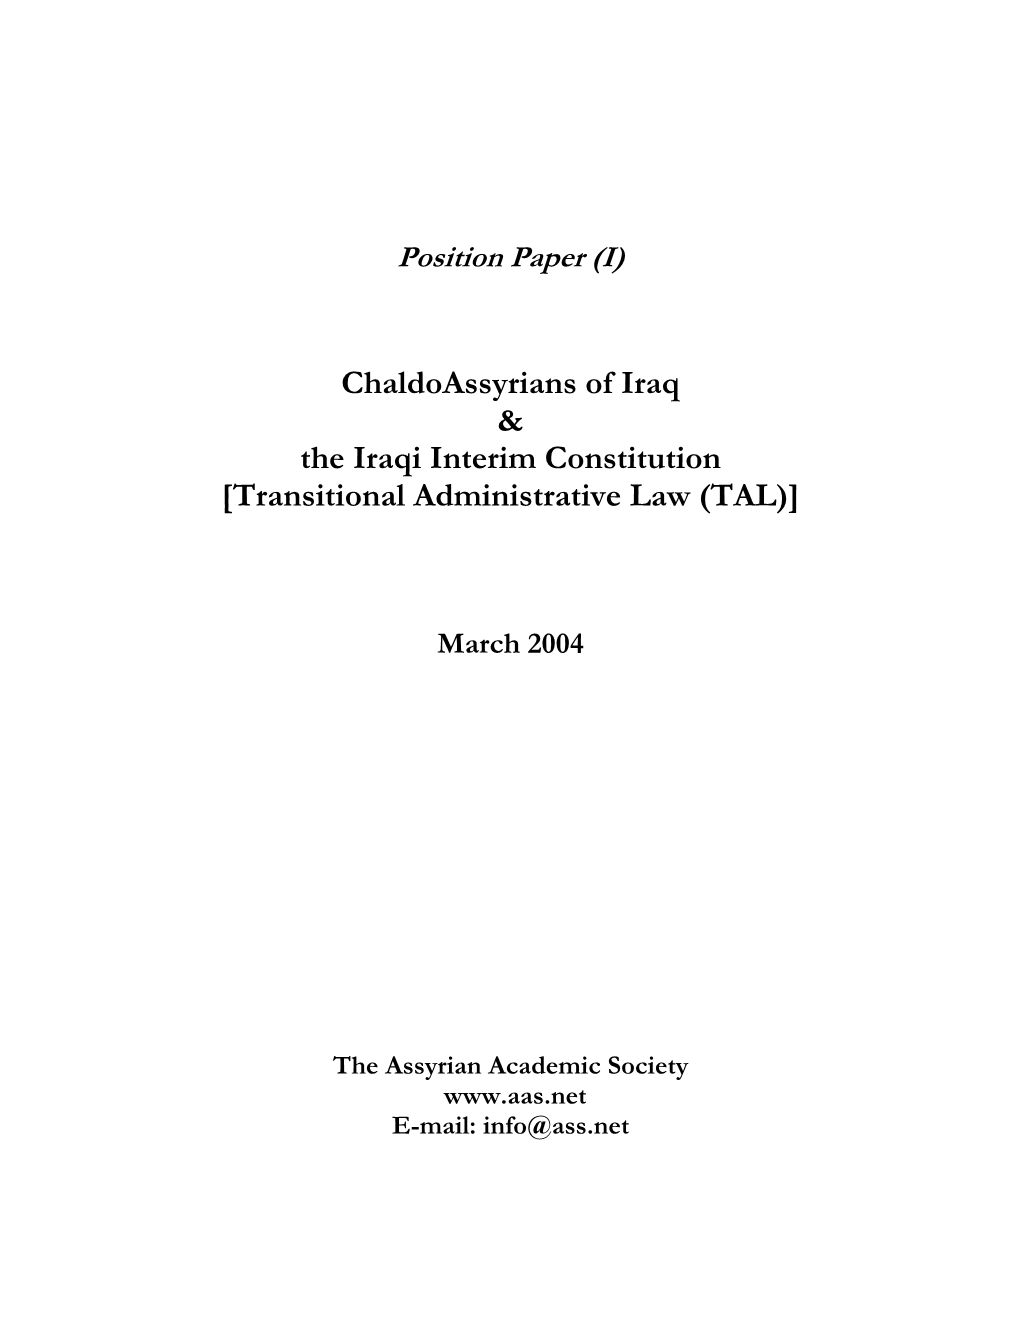 Chaldoassyrians of Iraq and the Iraqi Interim Constitution